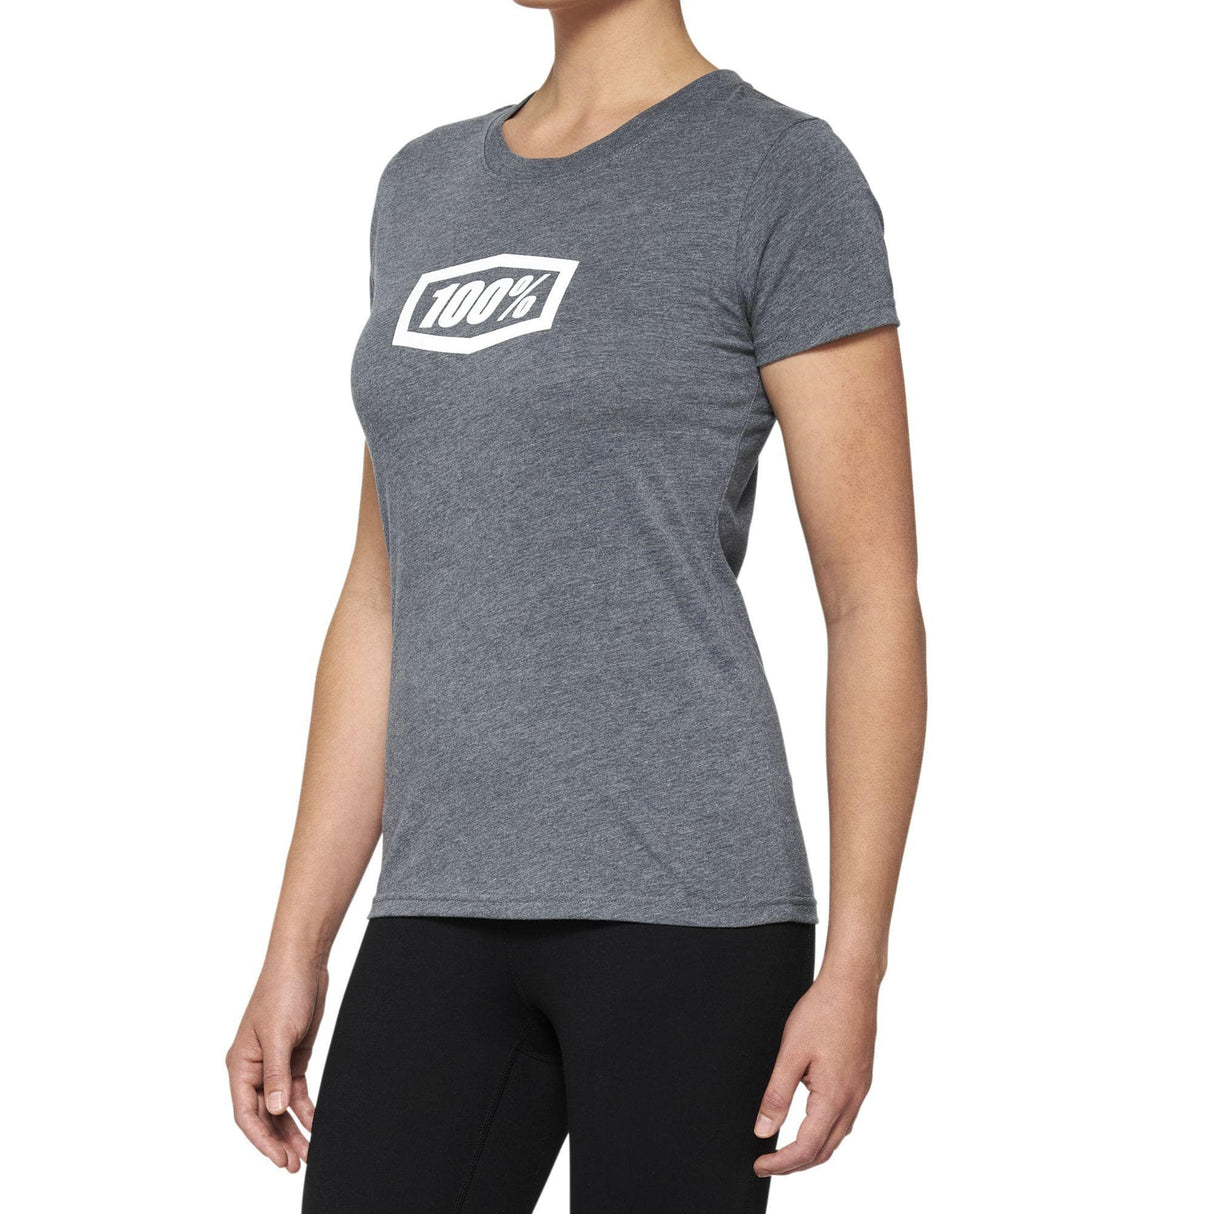 100% ICON Short Sleeve Women's T-Shirt Heather Grey XL